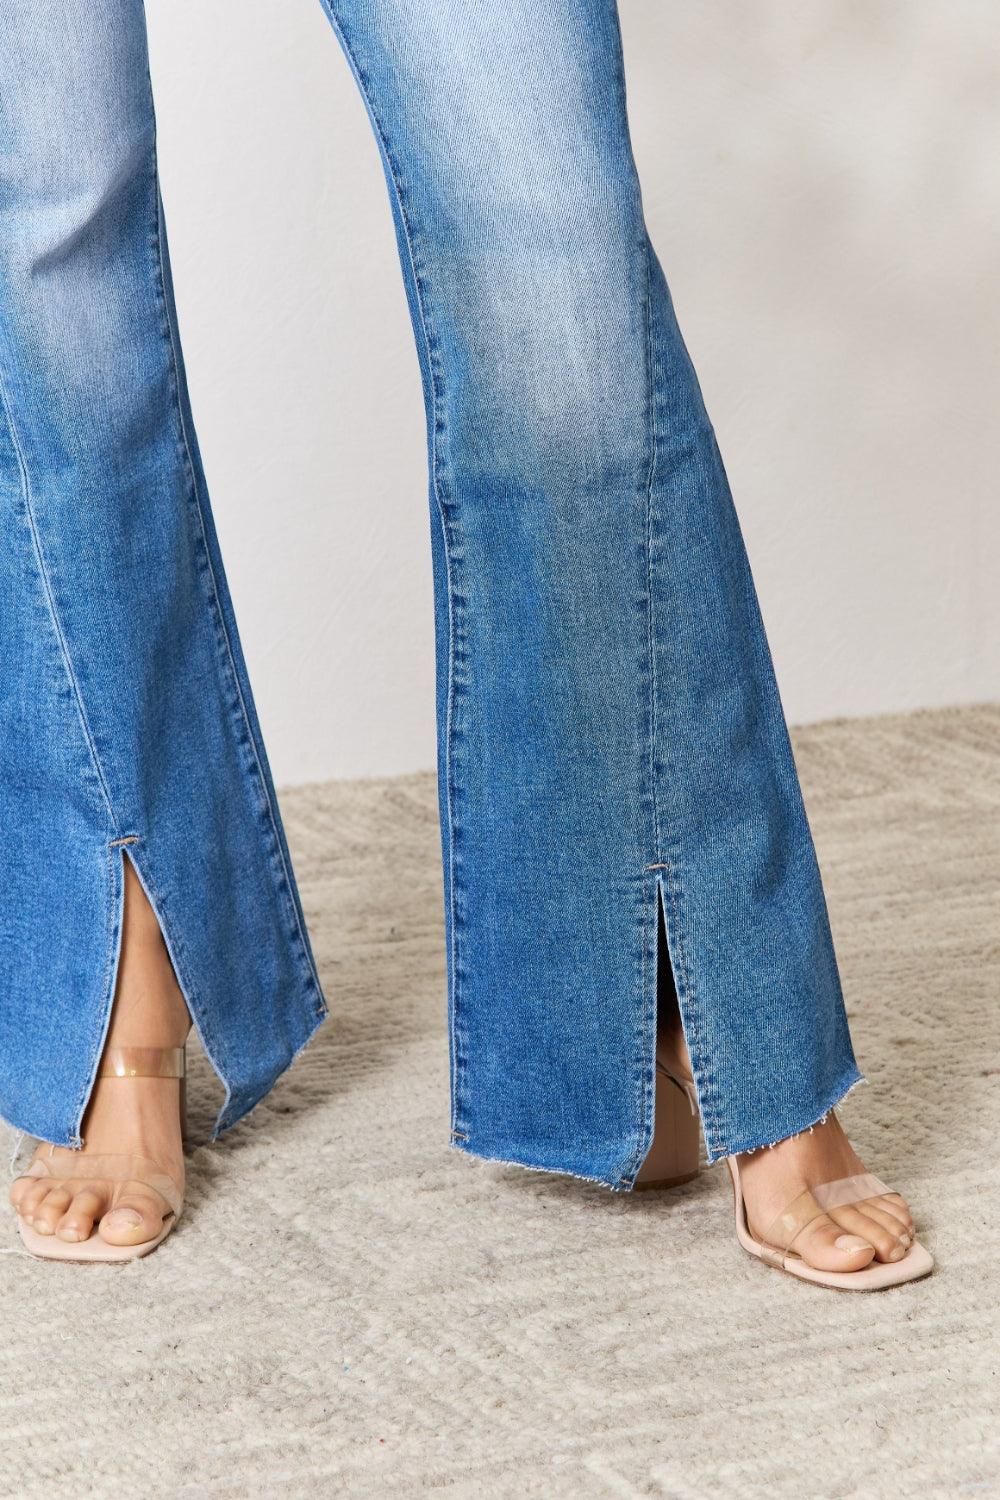 BAYEAS Slit Flare Jeans - AMIClubwear